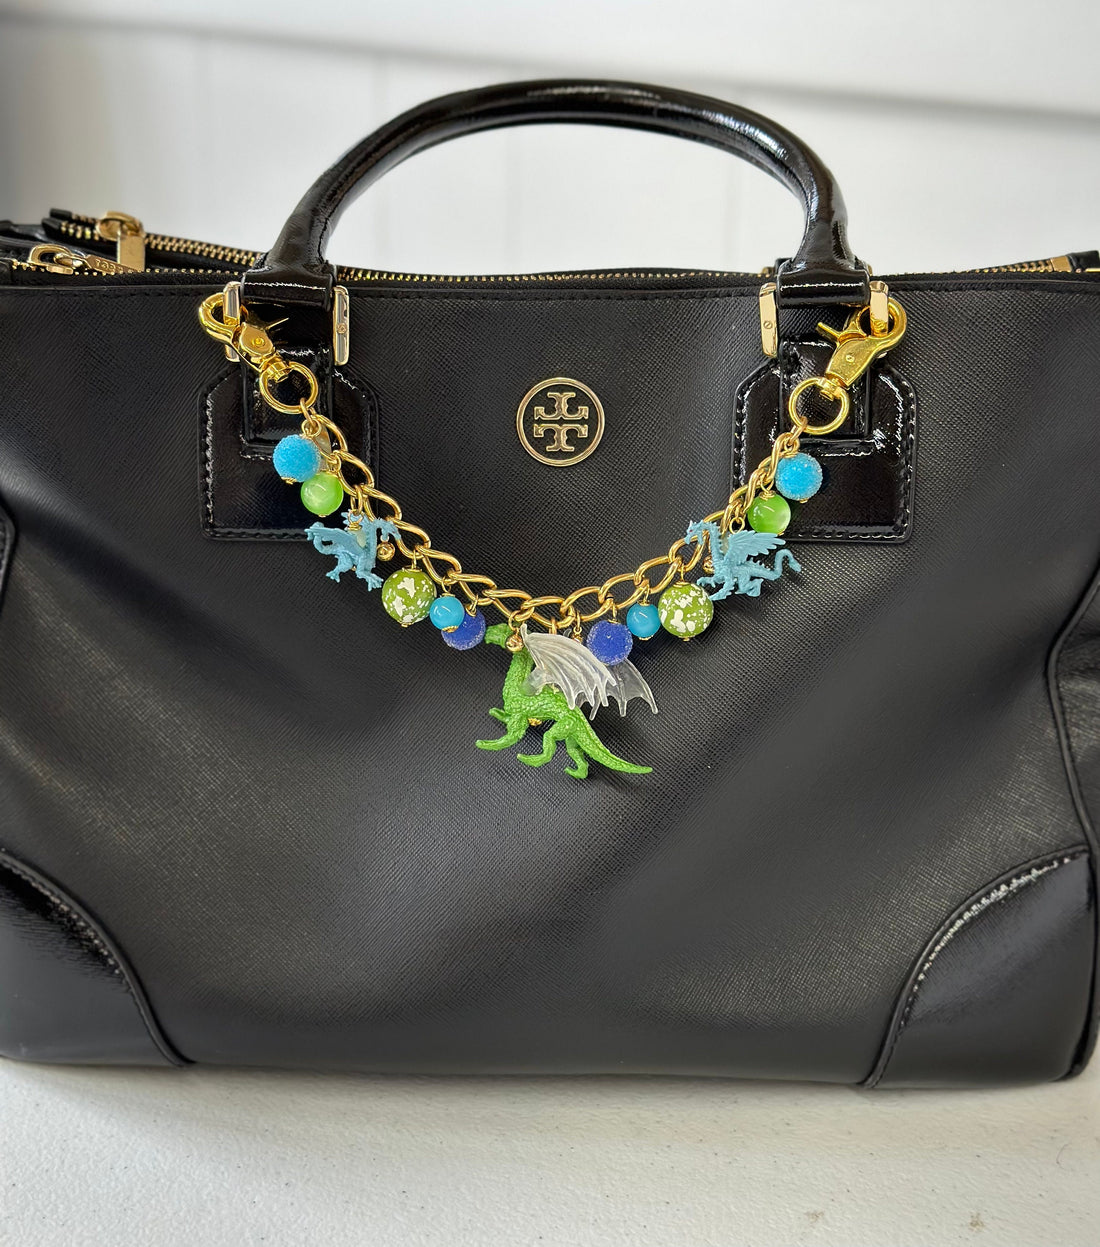 NEW DESIGN! Lenora Dame Dragon Chain Bag Charm